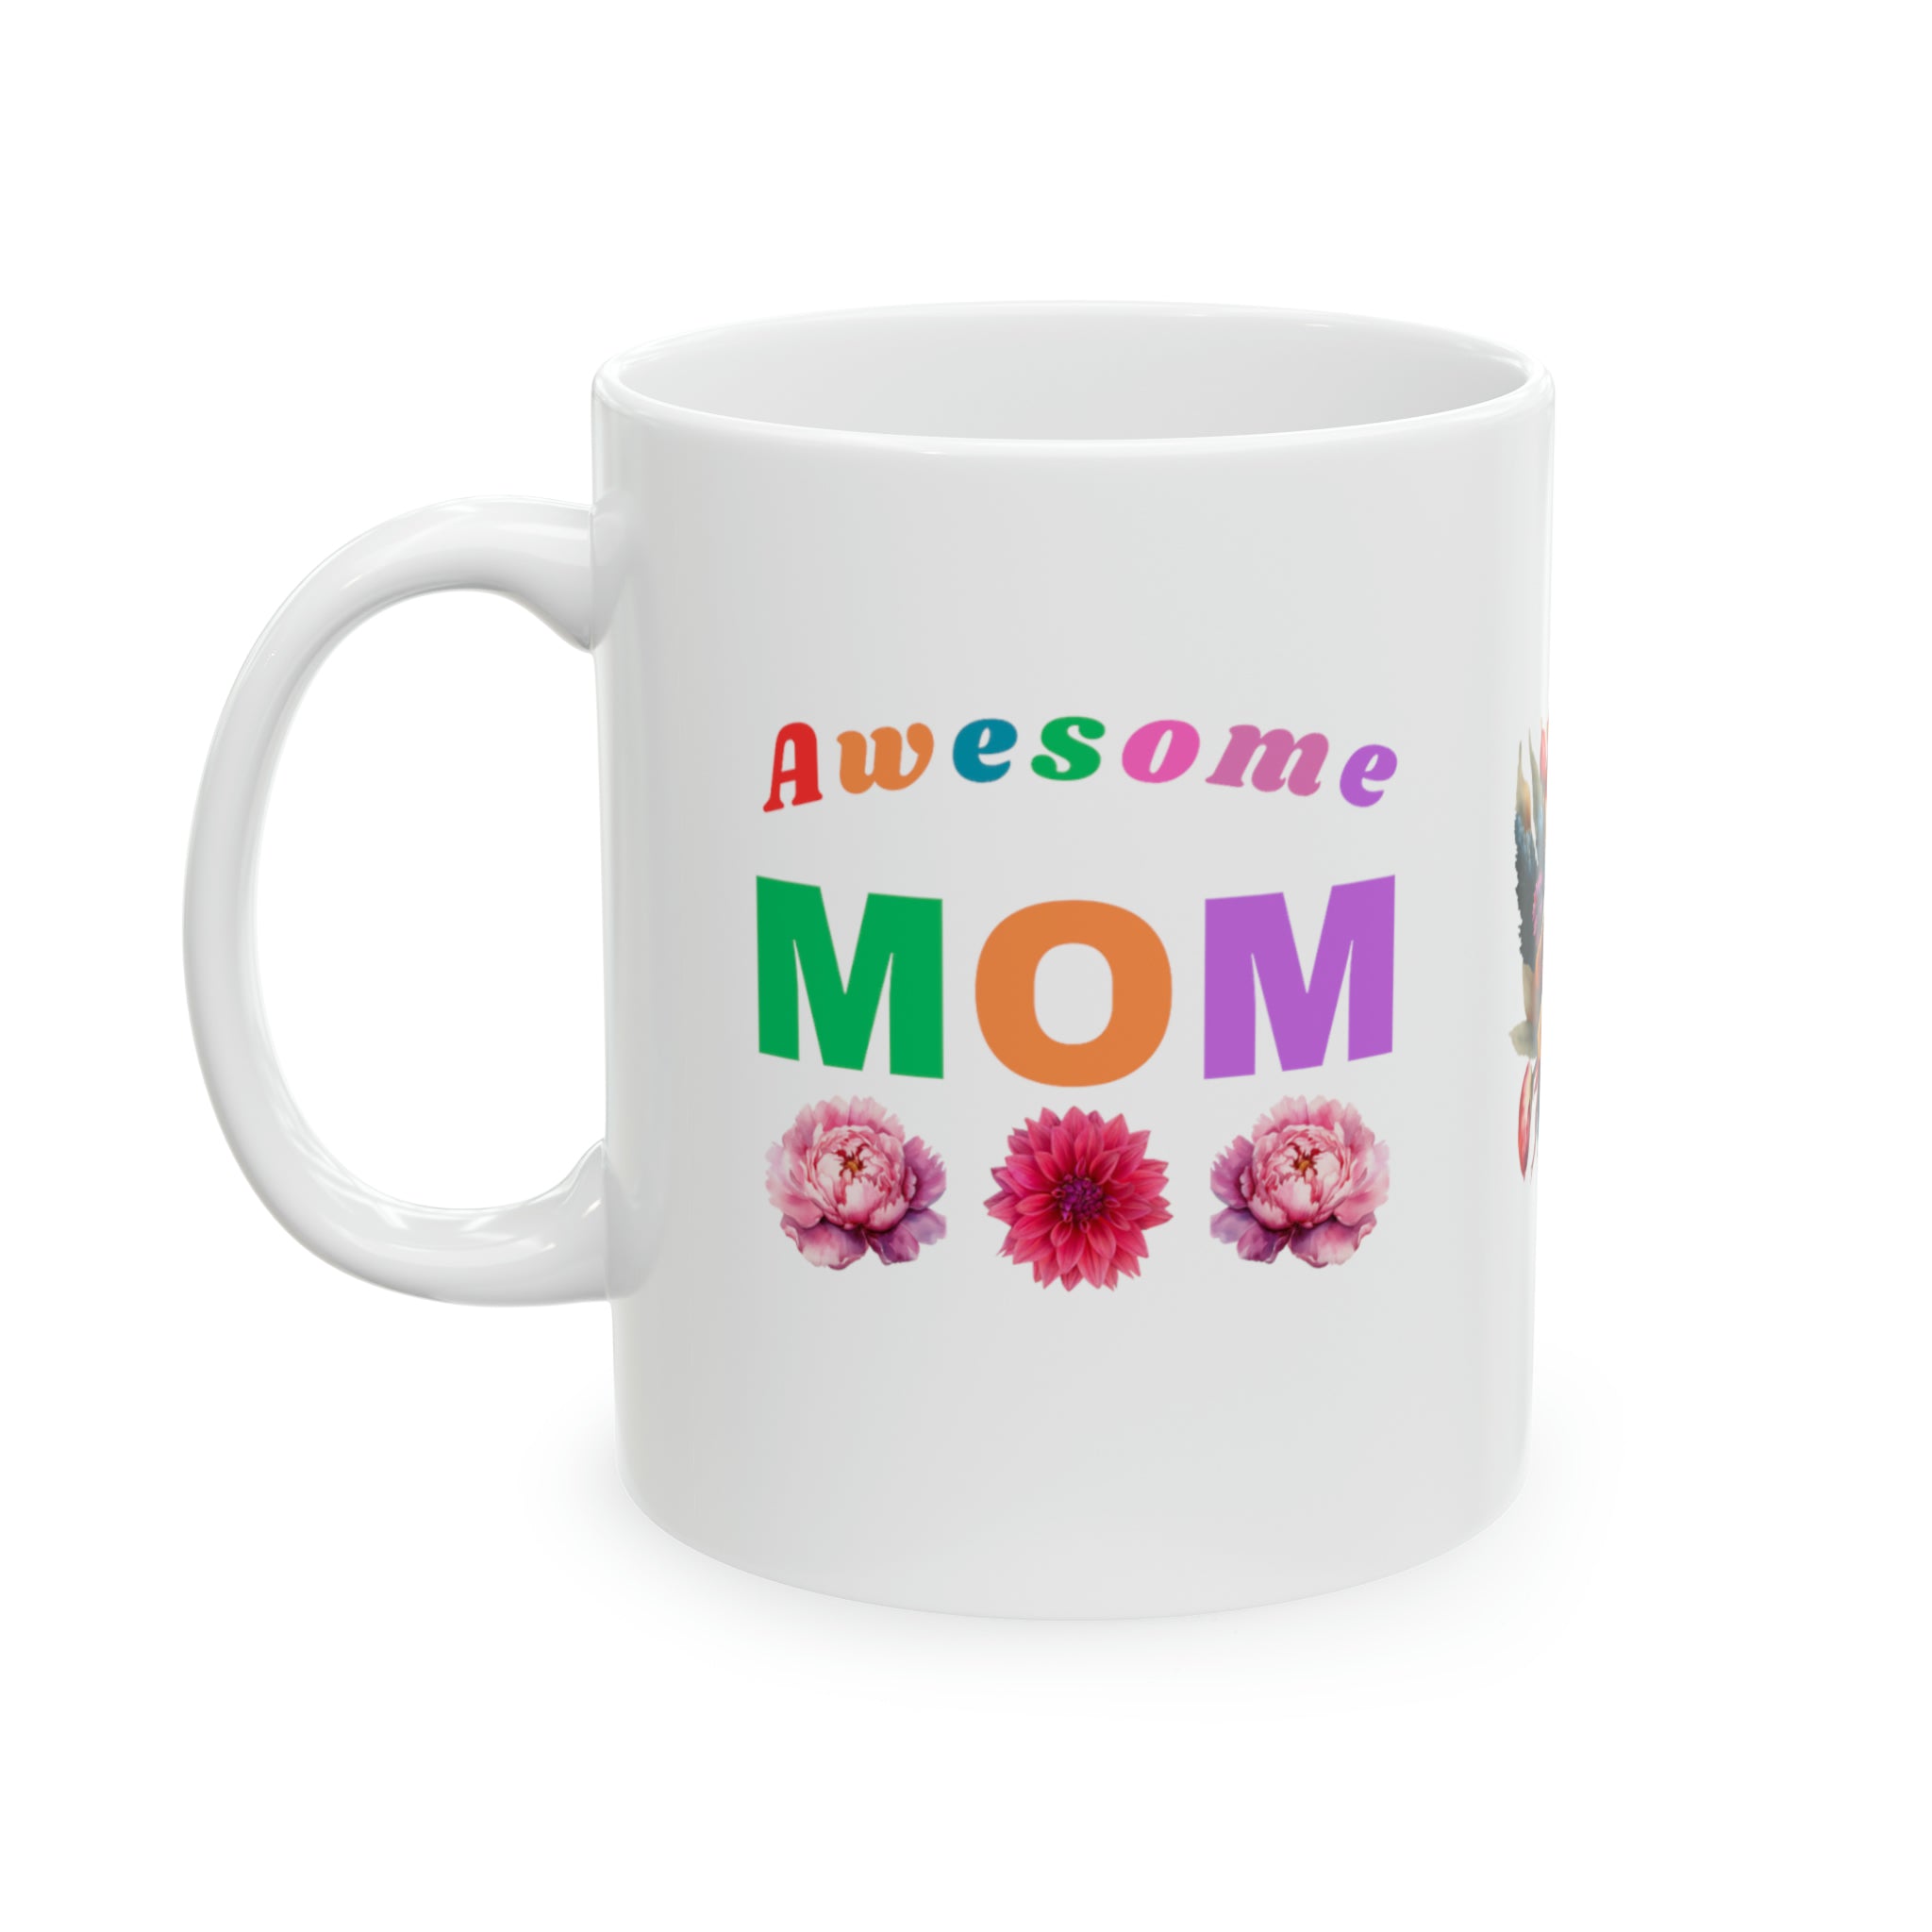 Awesome Mom 11 Oz Ceramic Mug, Gift for Mom, Mother's Day Gift, Gift for New Mom, Coffee mug for Mom